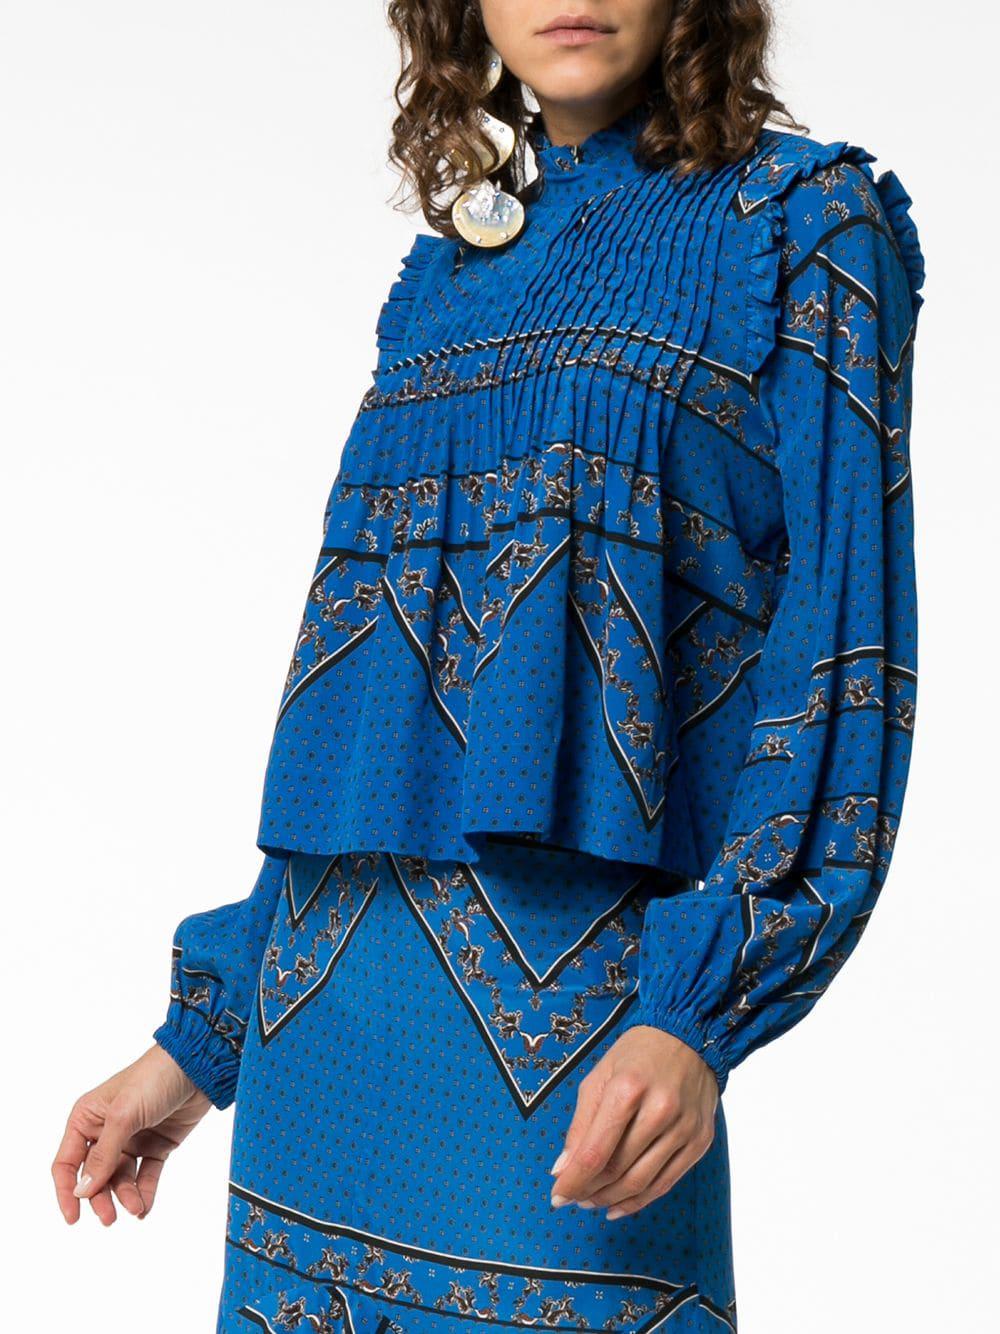 Ganni Cloverdale Pleat Detail Printed Silk Blouse in Blue - Lyst